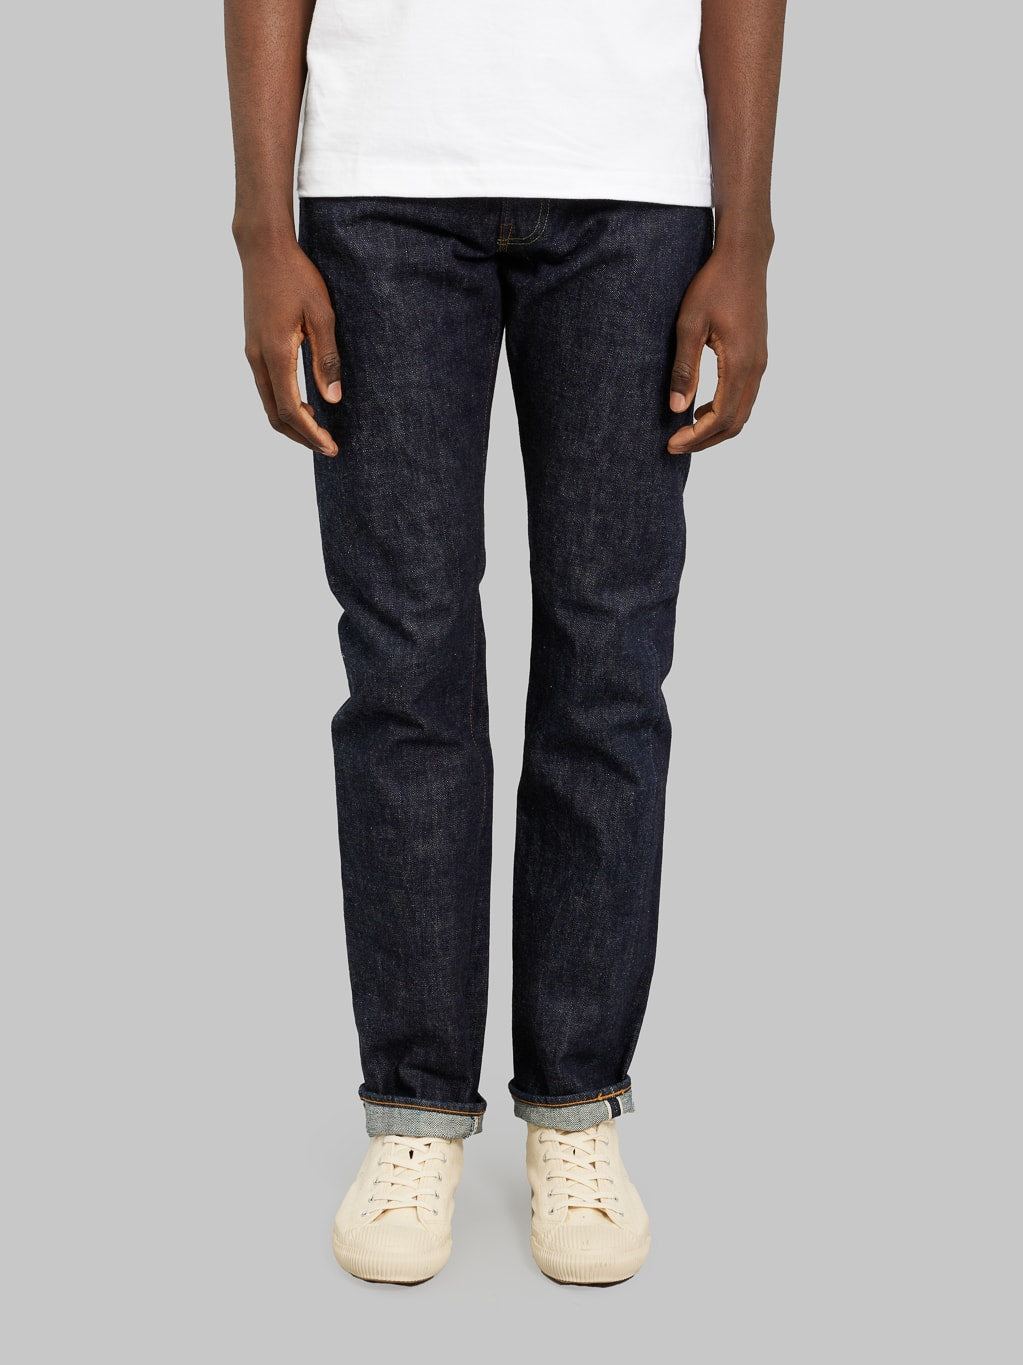 tcb jeans slim 50s selvedge japanese denim front fit